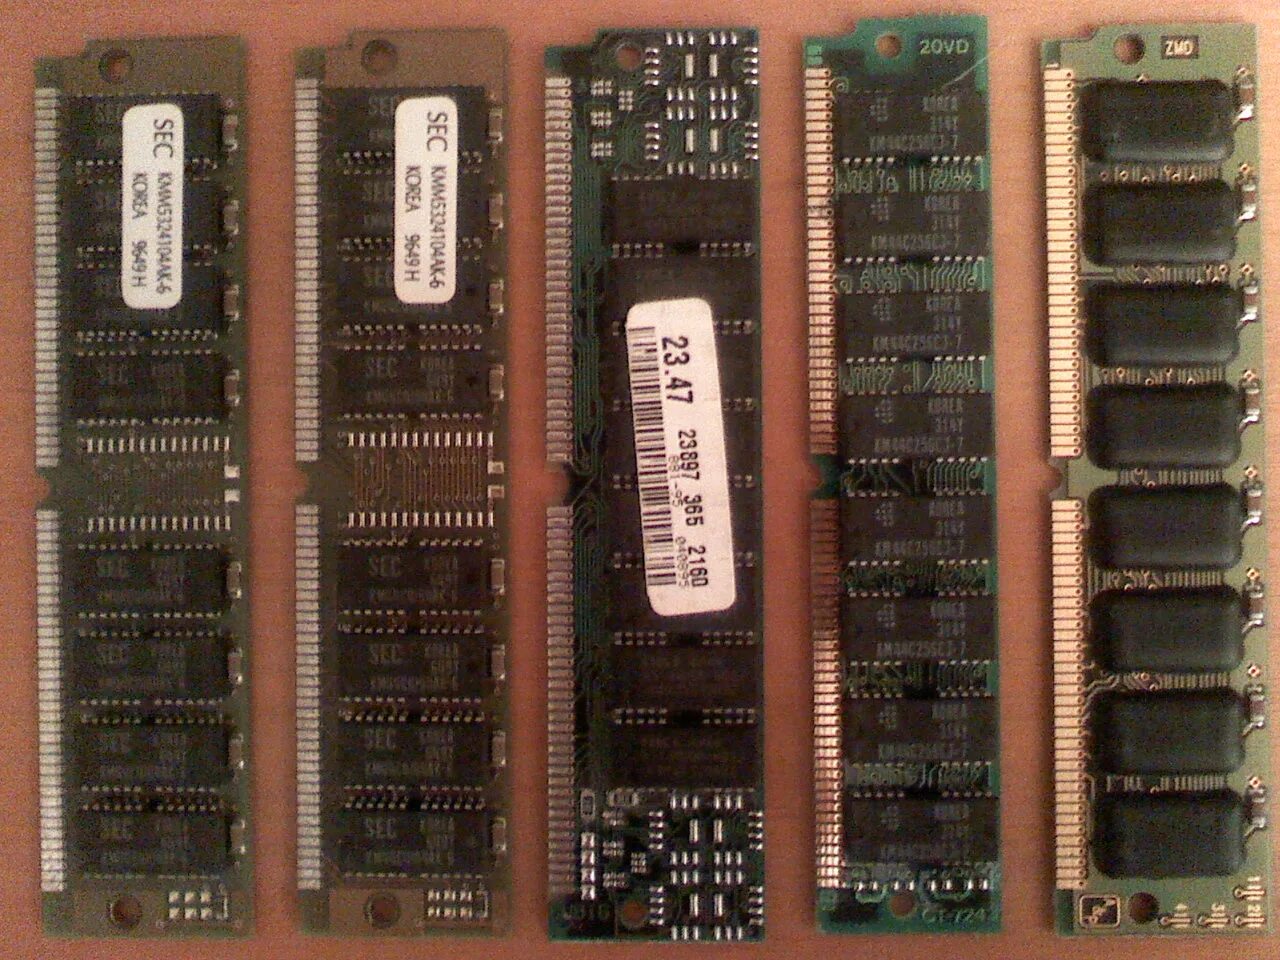 4116 Ram Chips. Simm Ram Module. Old Ram New Ram PC. Dual in-line Memory Module. Open memory